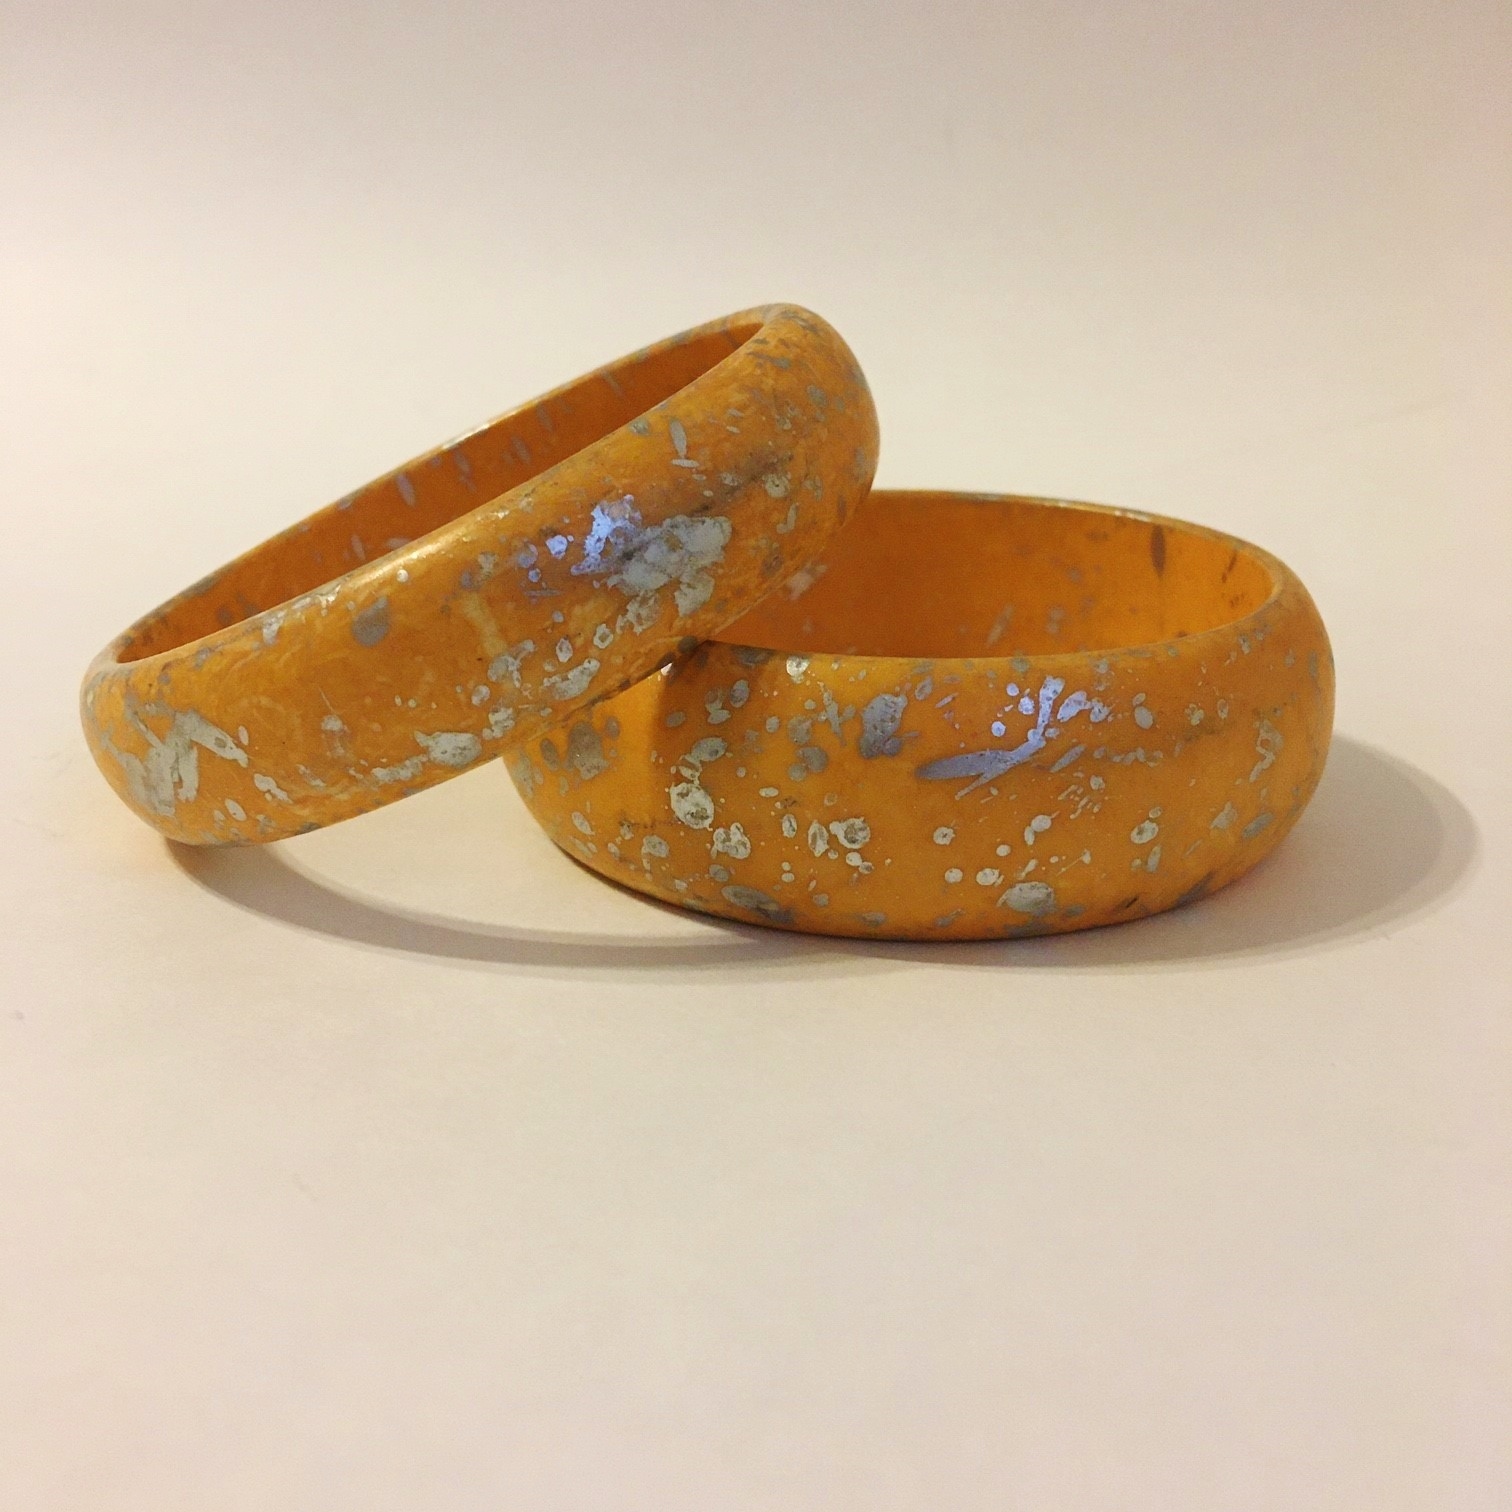 Primary image for Bracelet Pair Orange Silver Splatter Painted Wood Bangle Set of 2 New